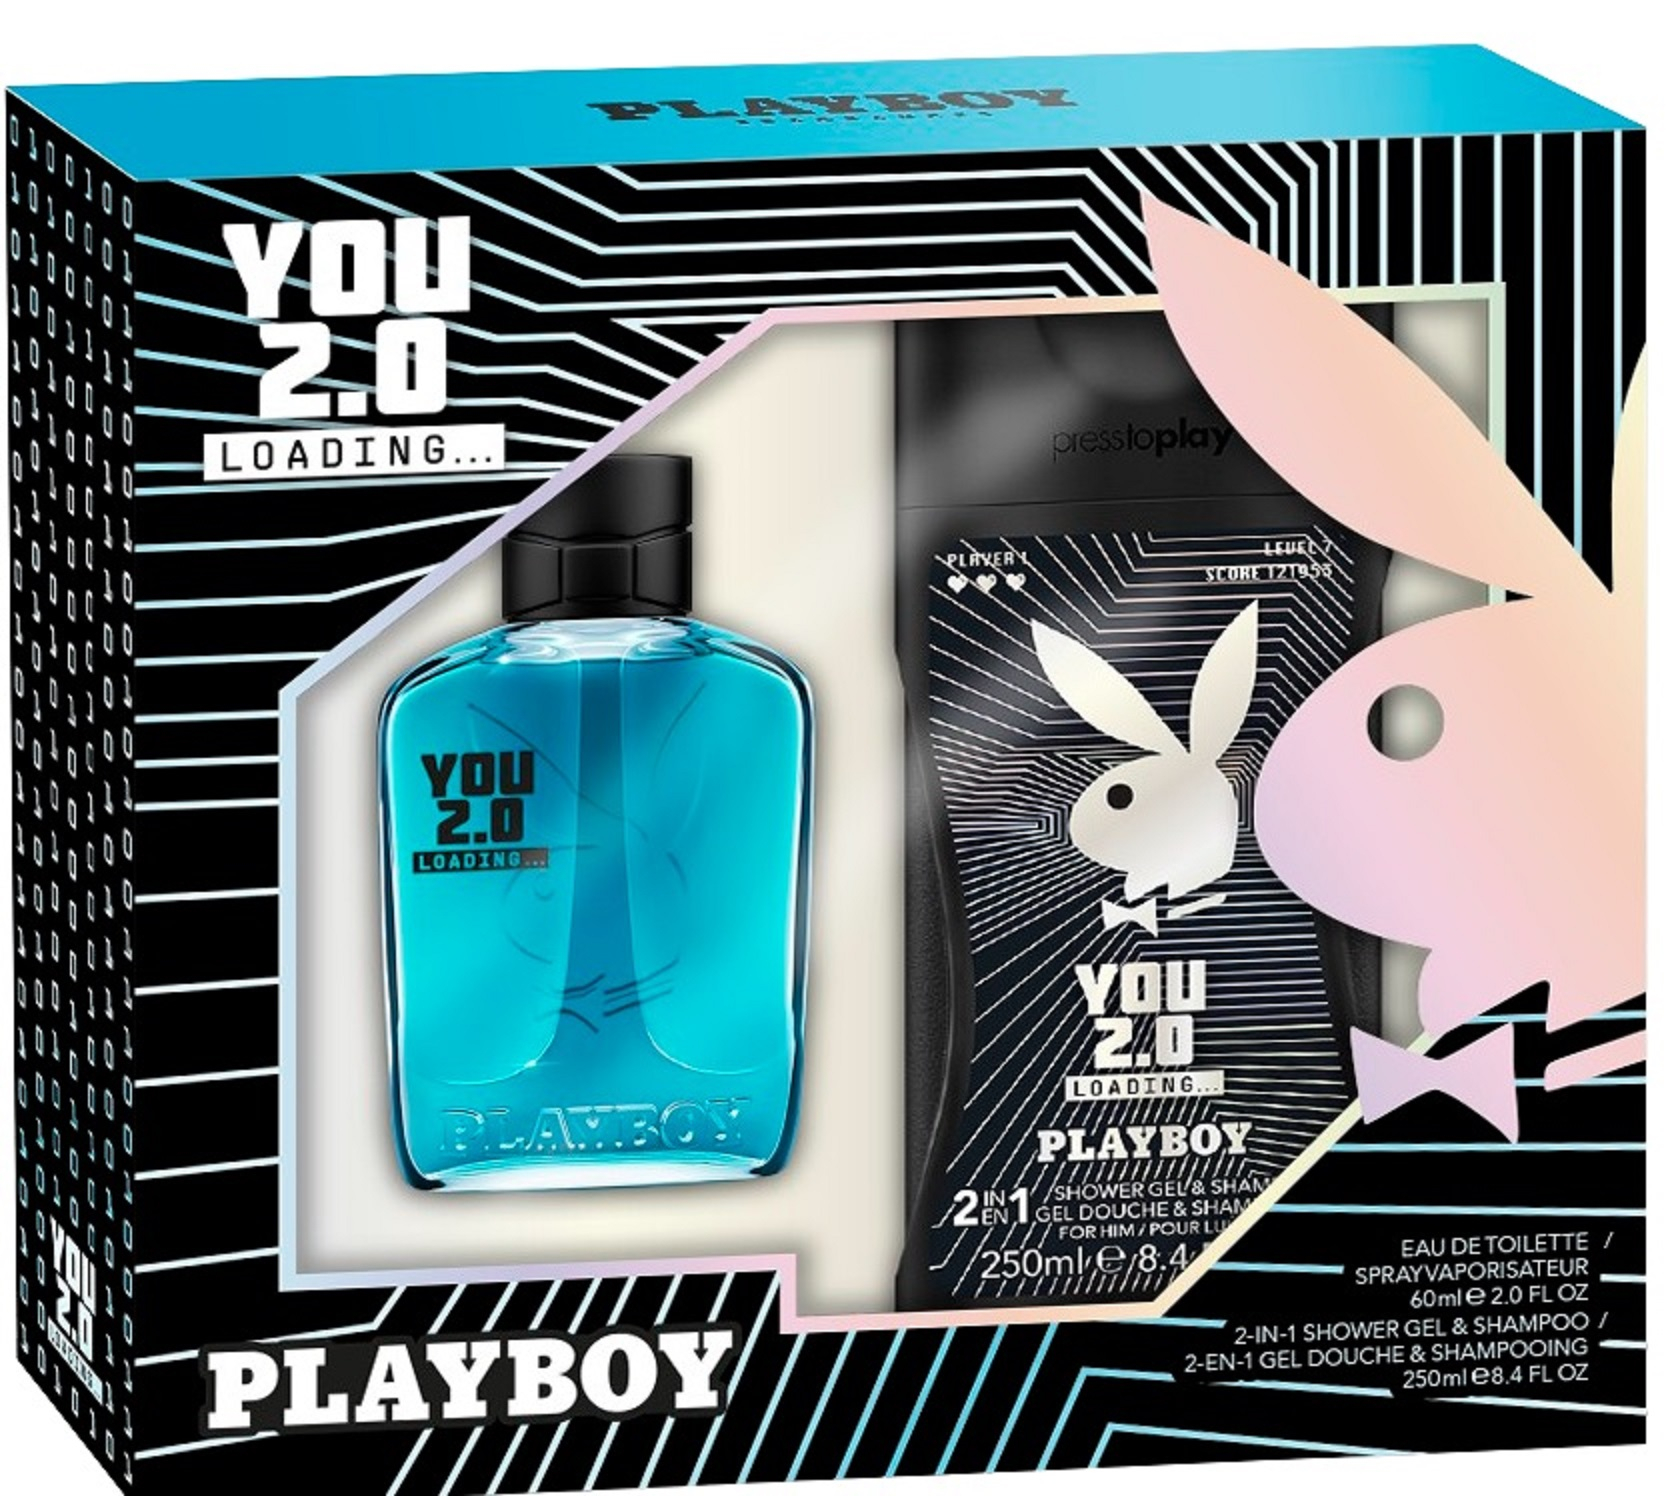 Playboy You 2.0 Loading For Him - EDT 60 ml + sprchový gel 250 ml